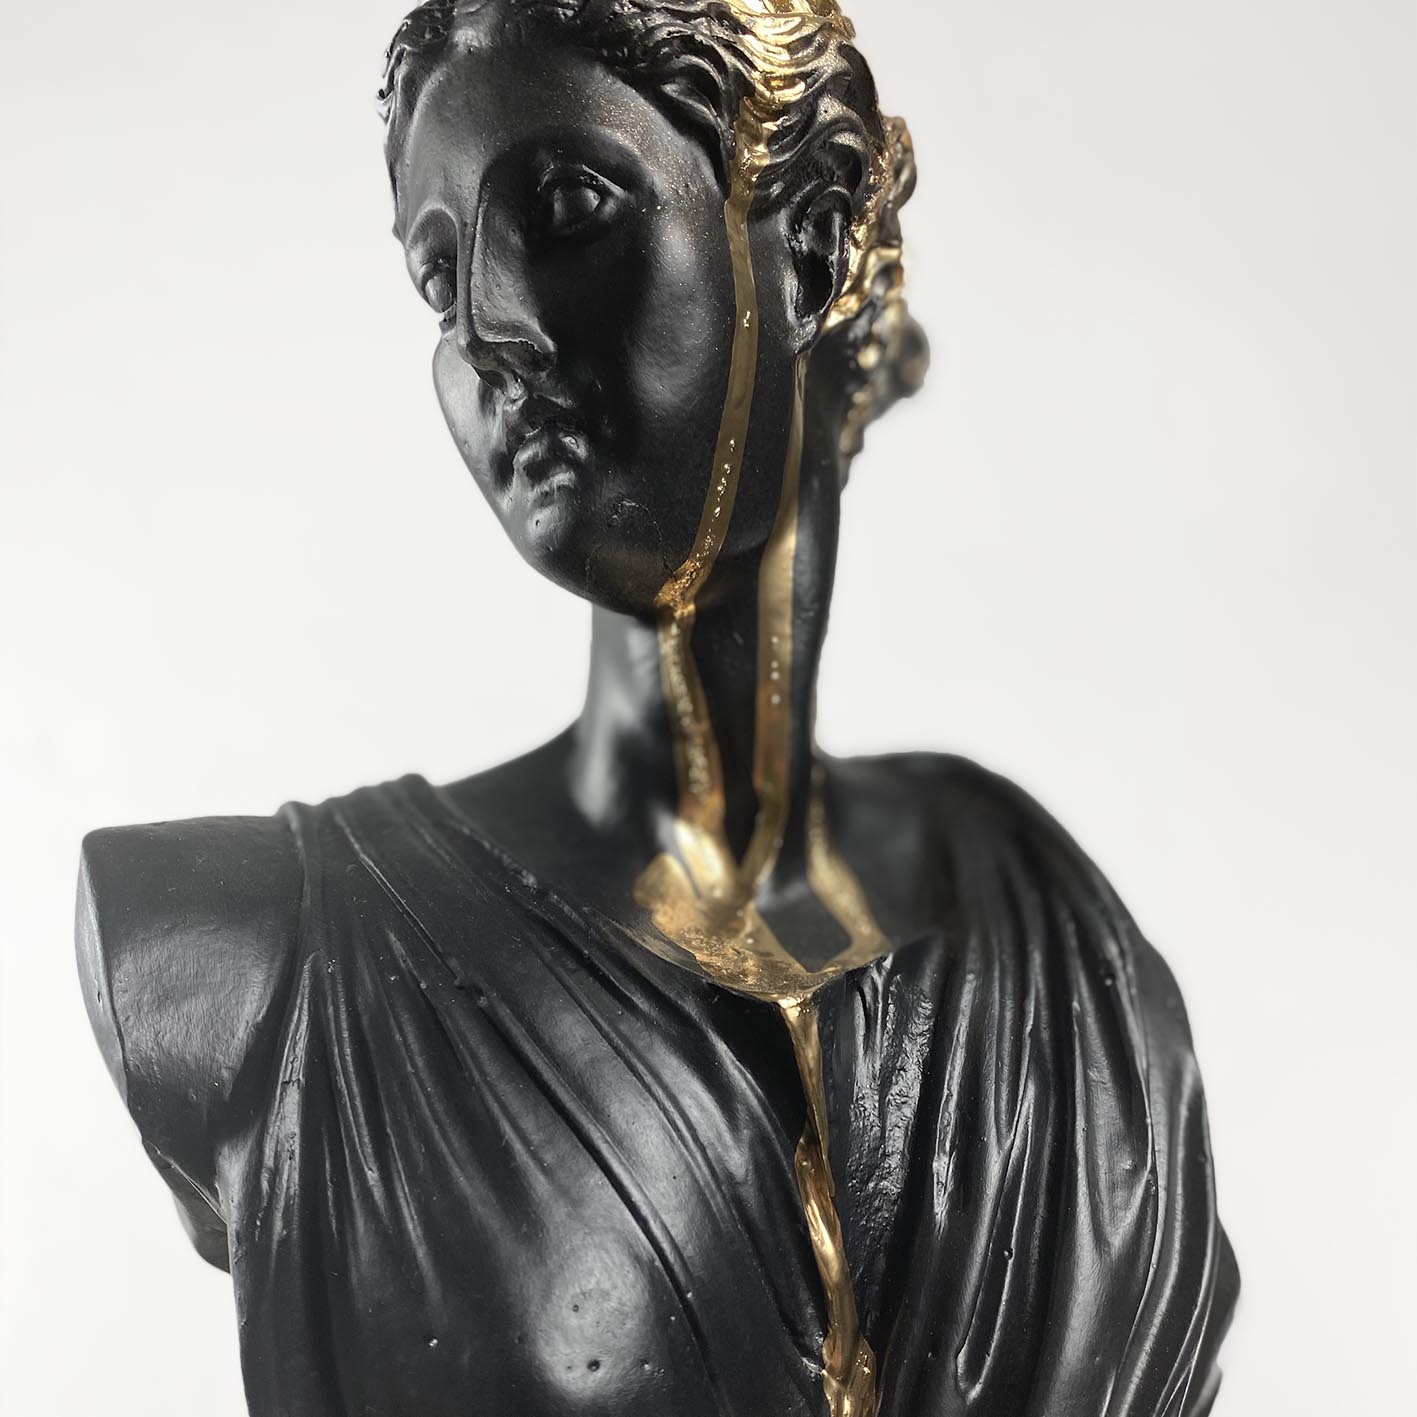 Artemis 'Pouring' Pop Art Sculpture, Modern Home Decor